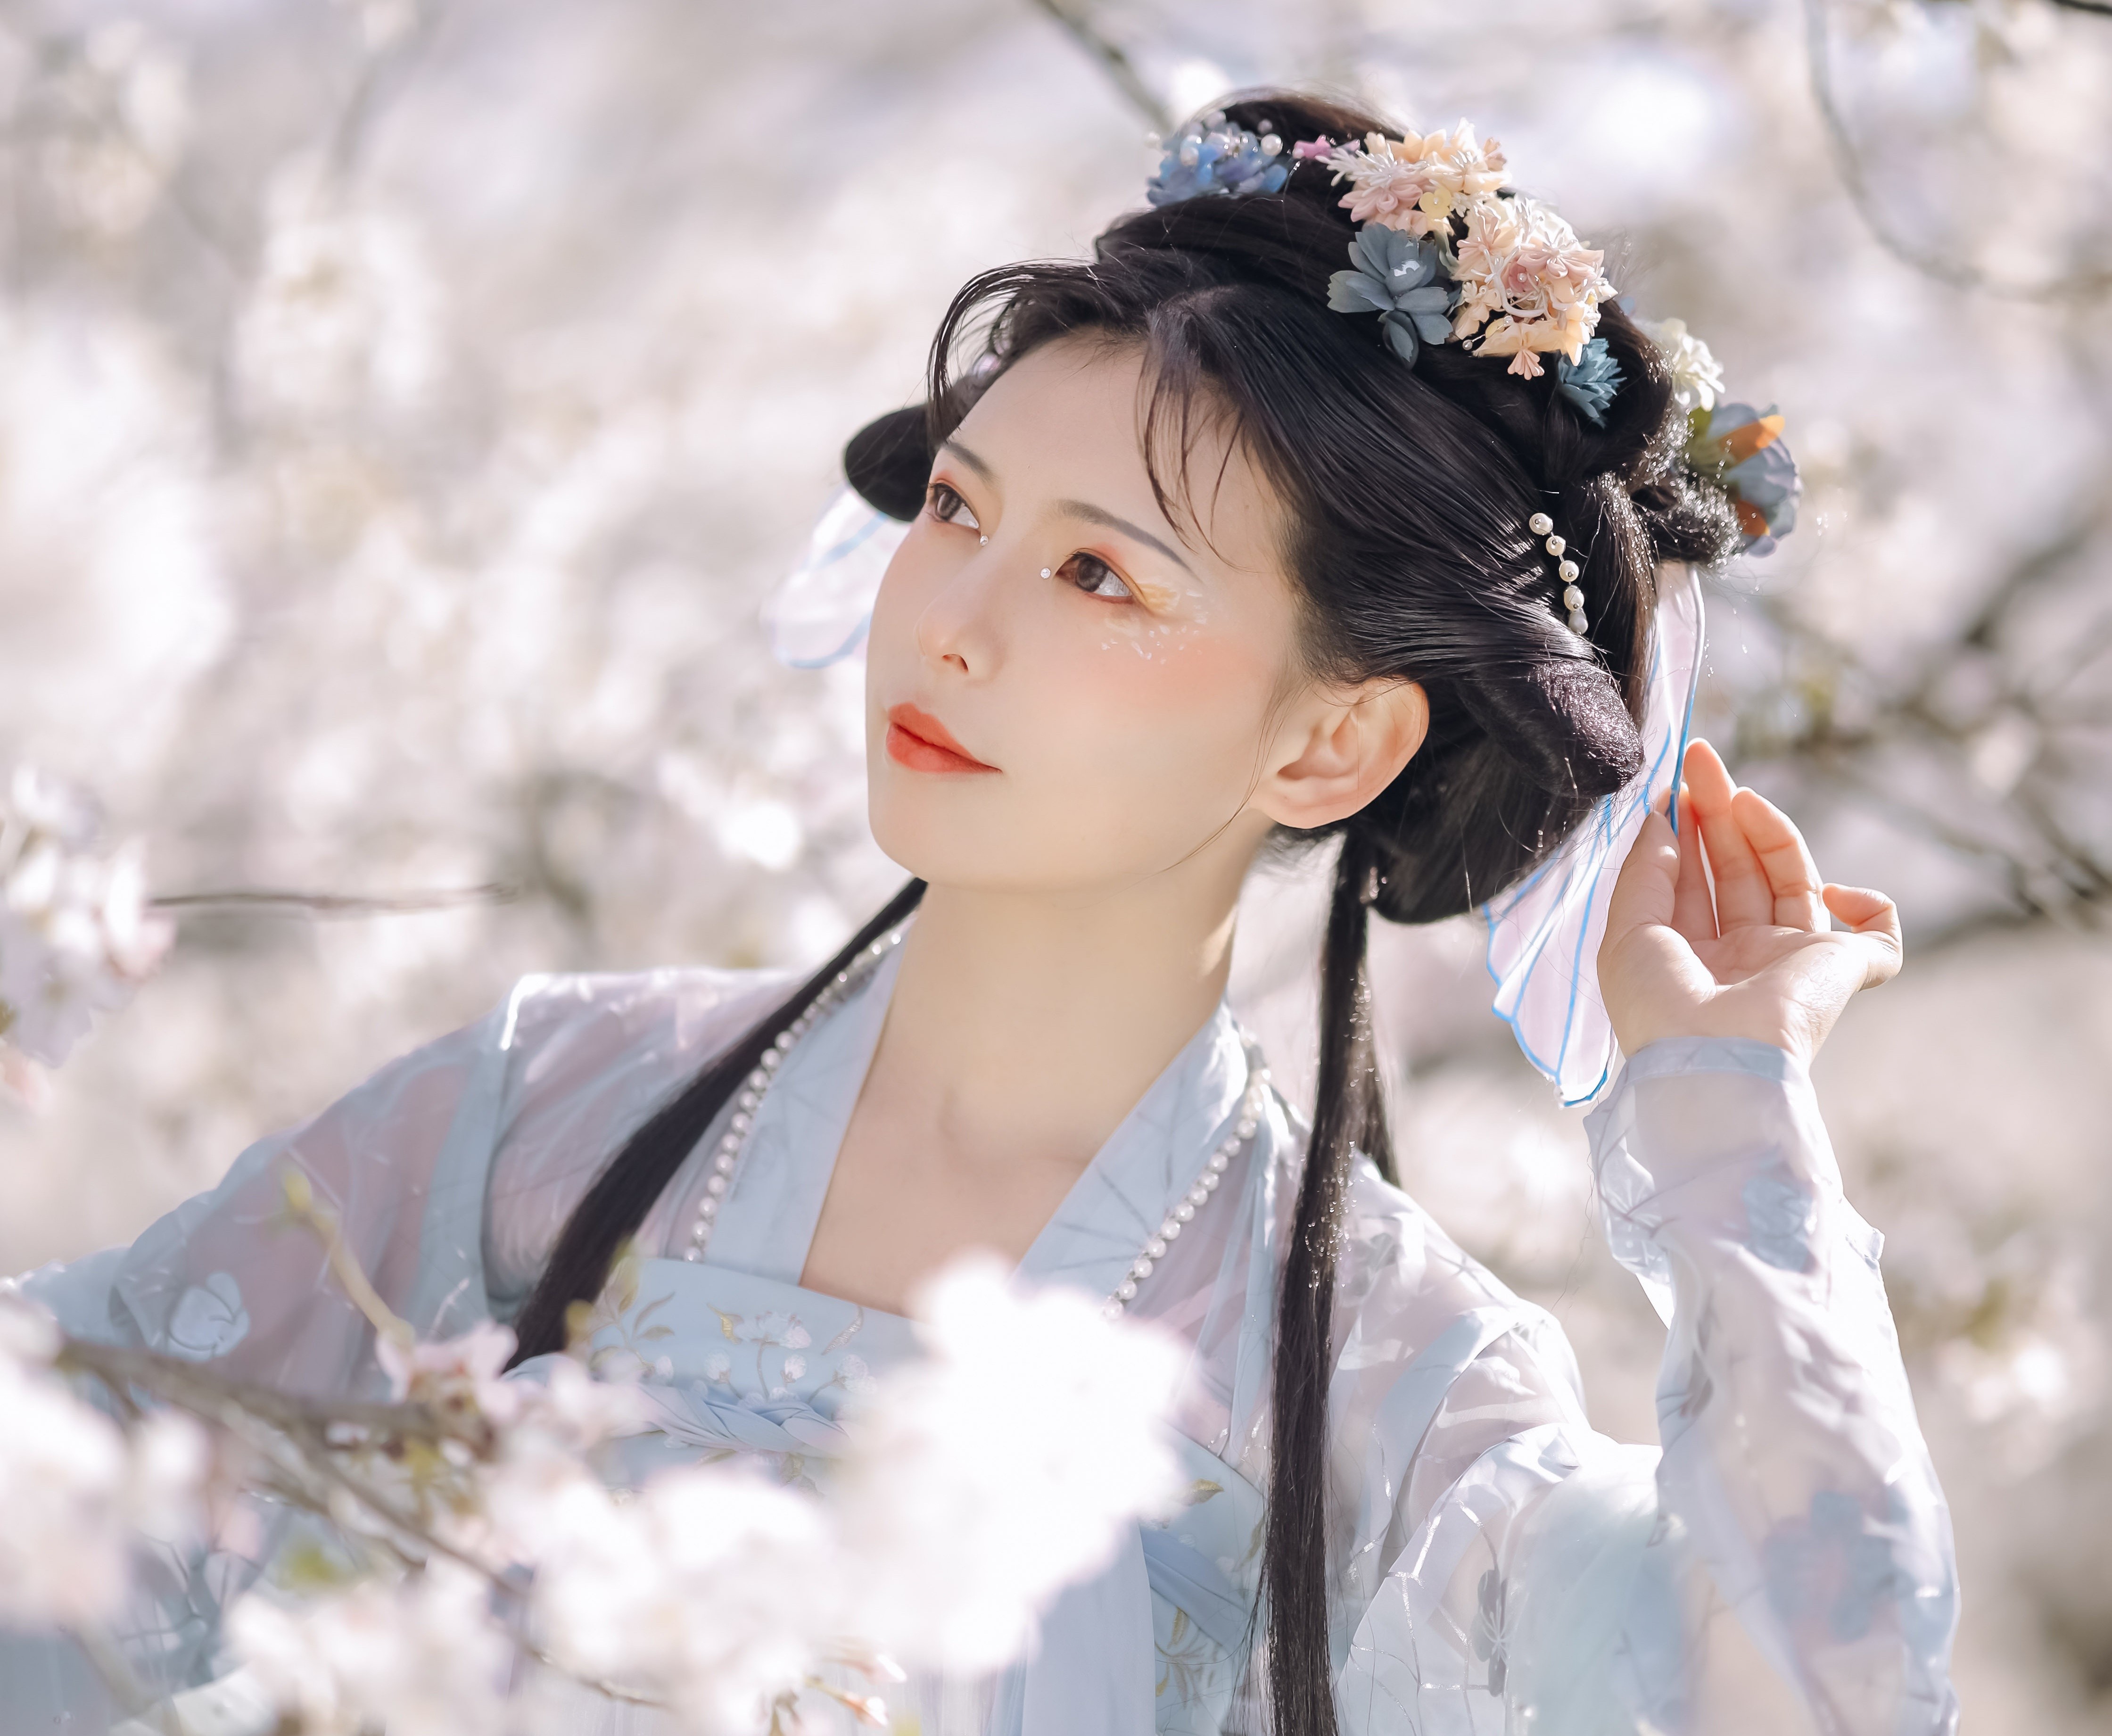 Archaic Wind Hanfu Women Outdoors Flower In Hair Asian 4480x3682